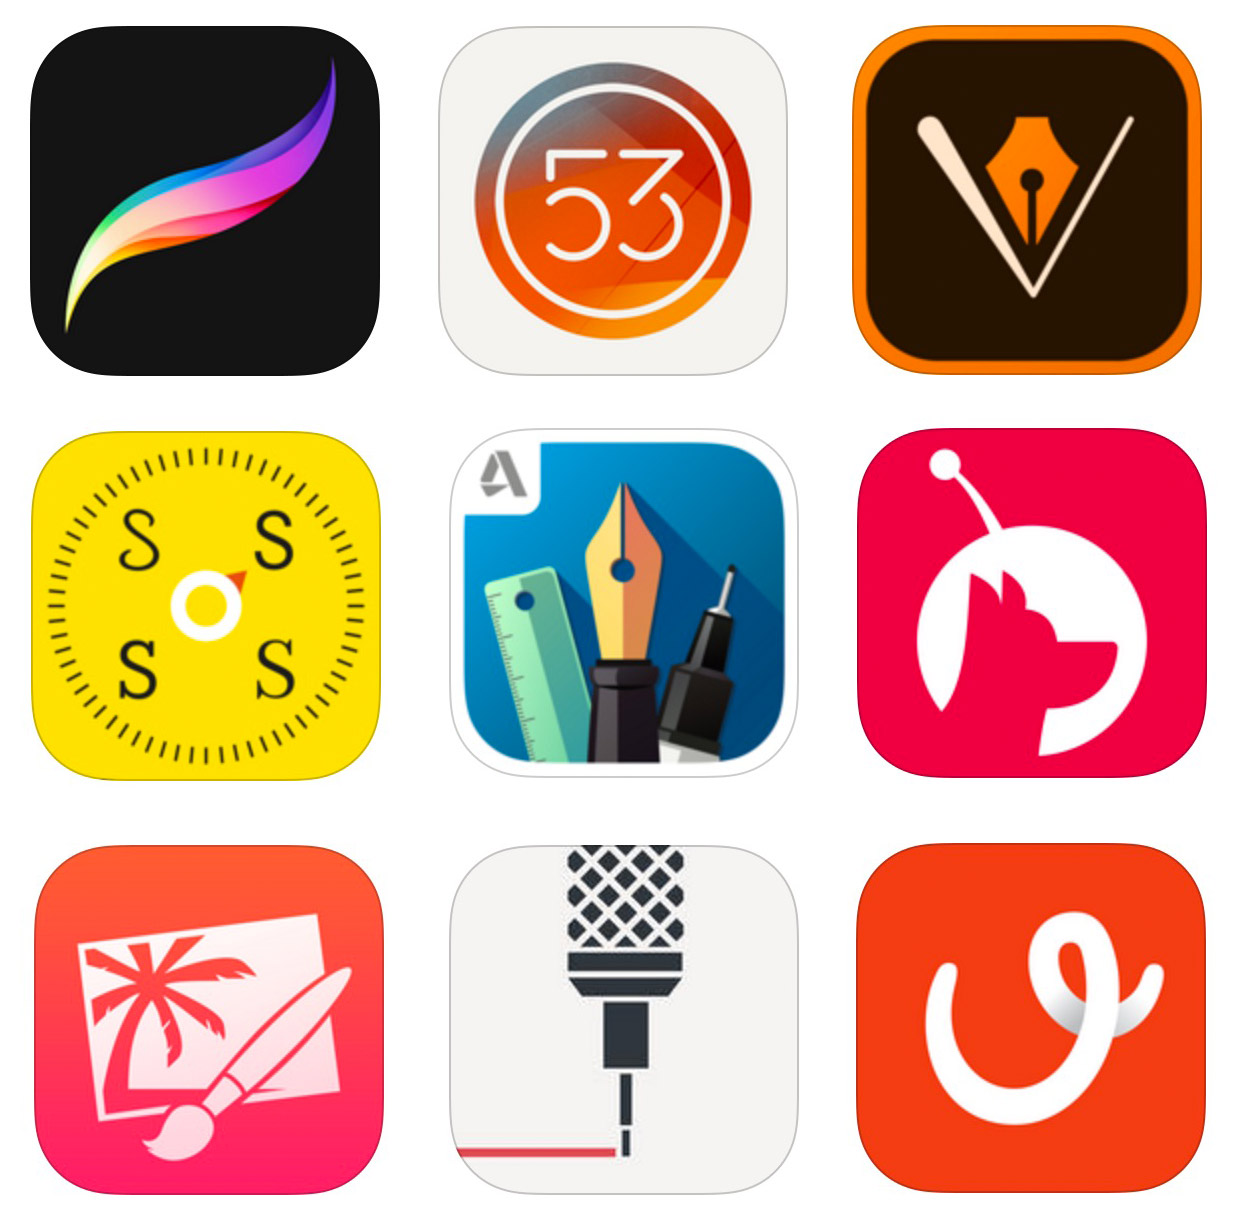 The Designer's iPad Pro App Buyer's Guide